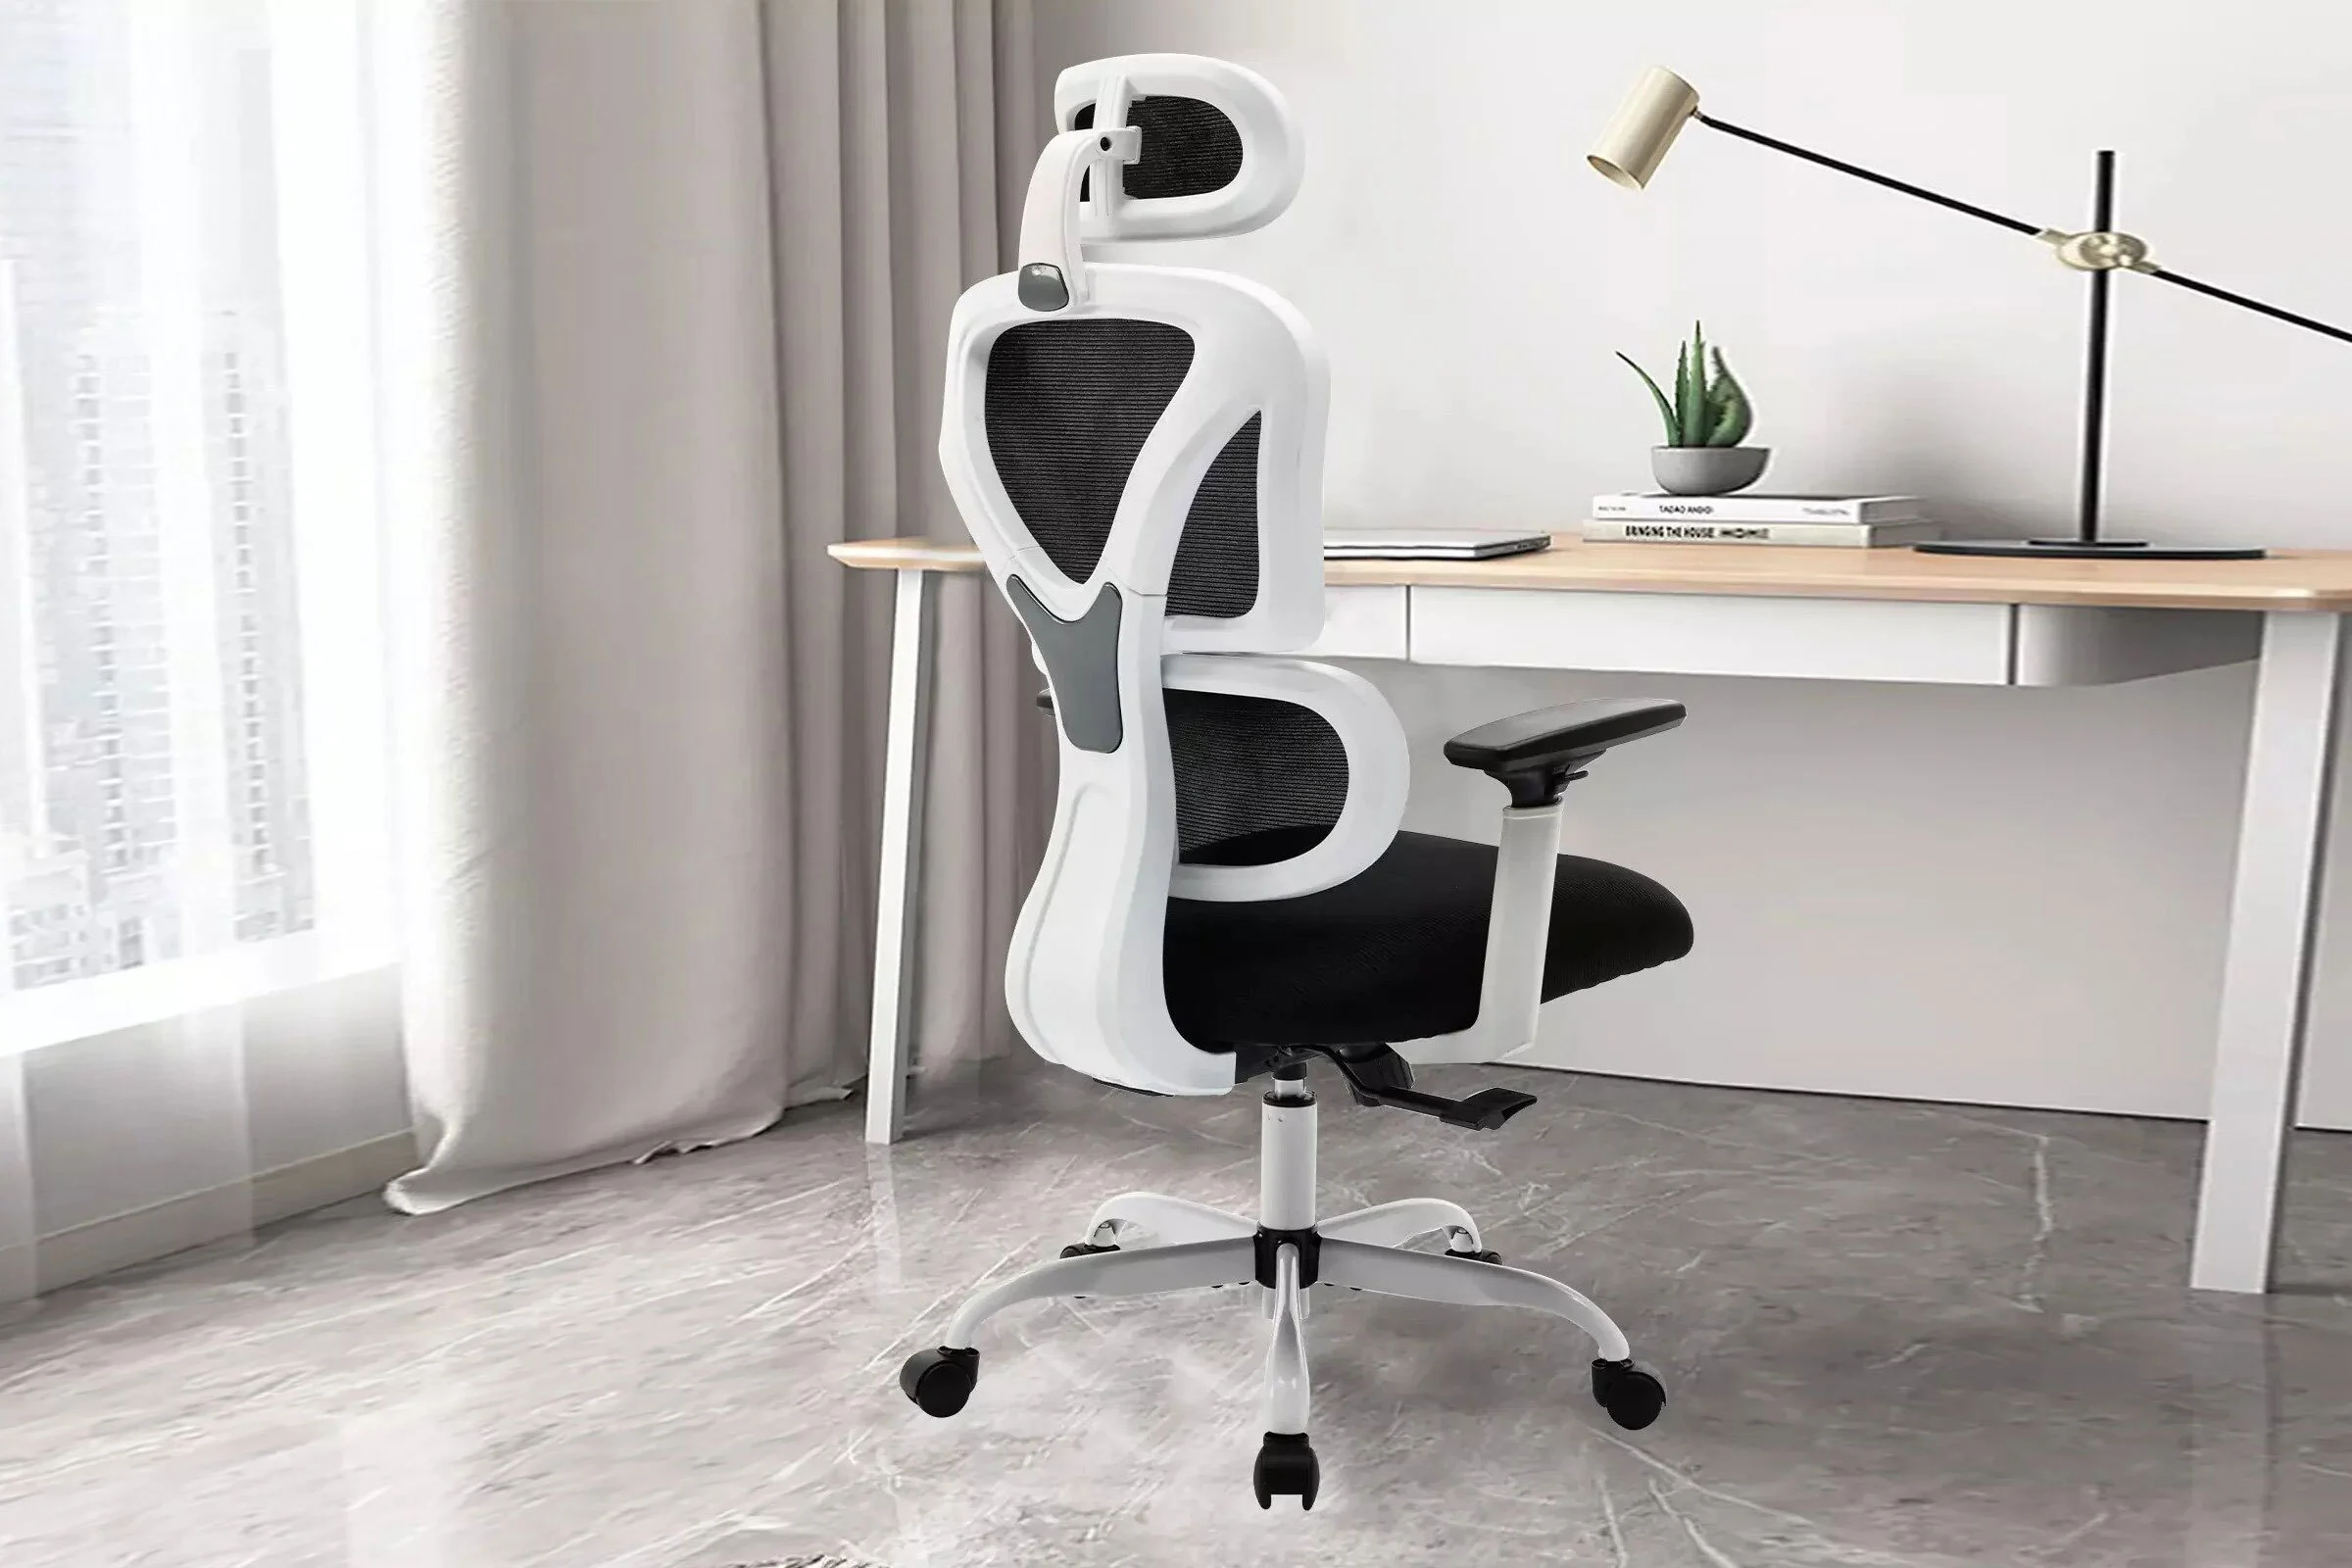 KERDOM FelixKing Ergonomic Chair: for Wooden Floor